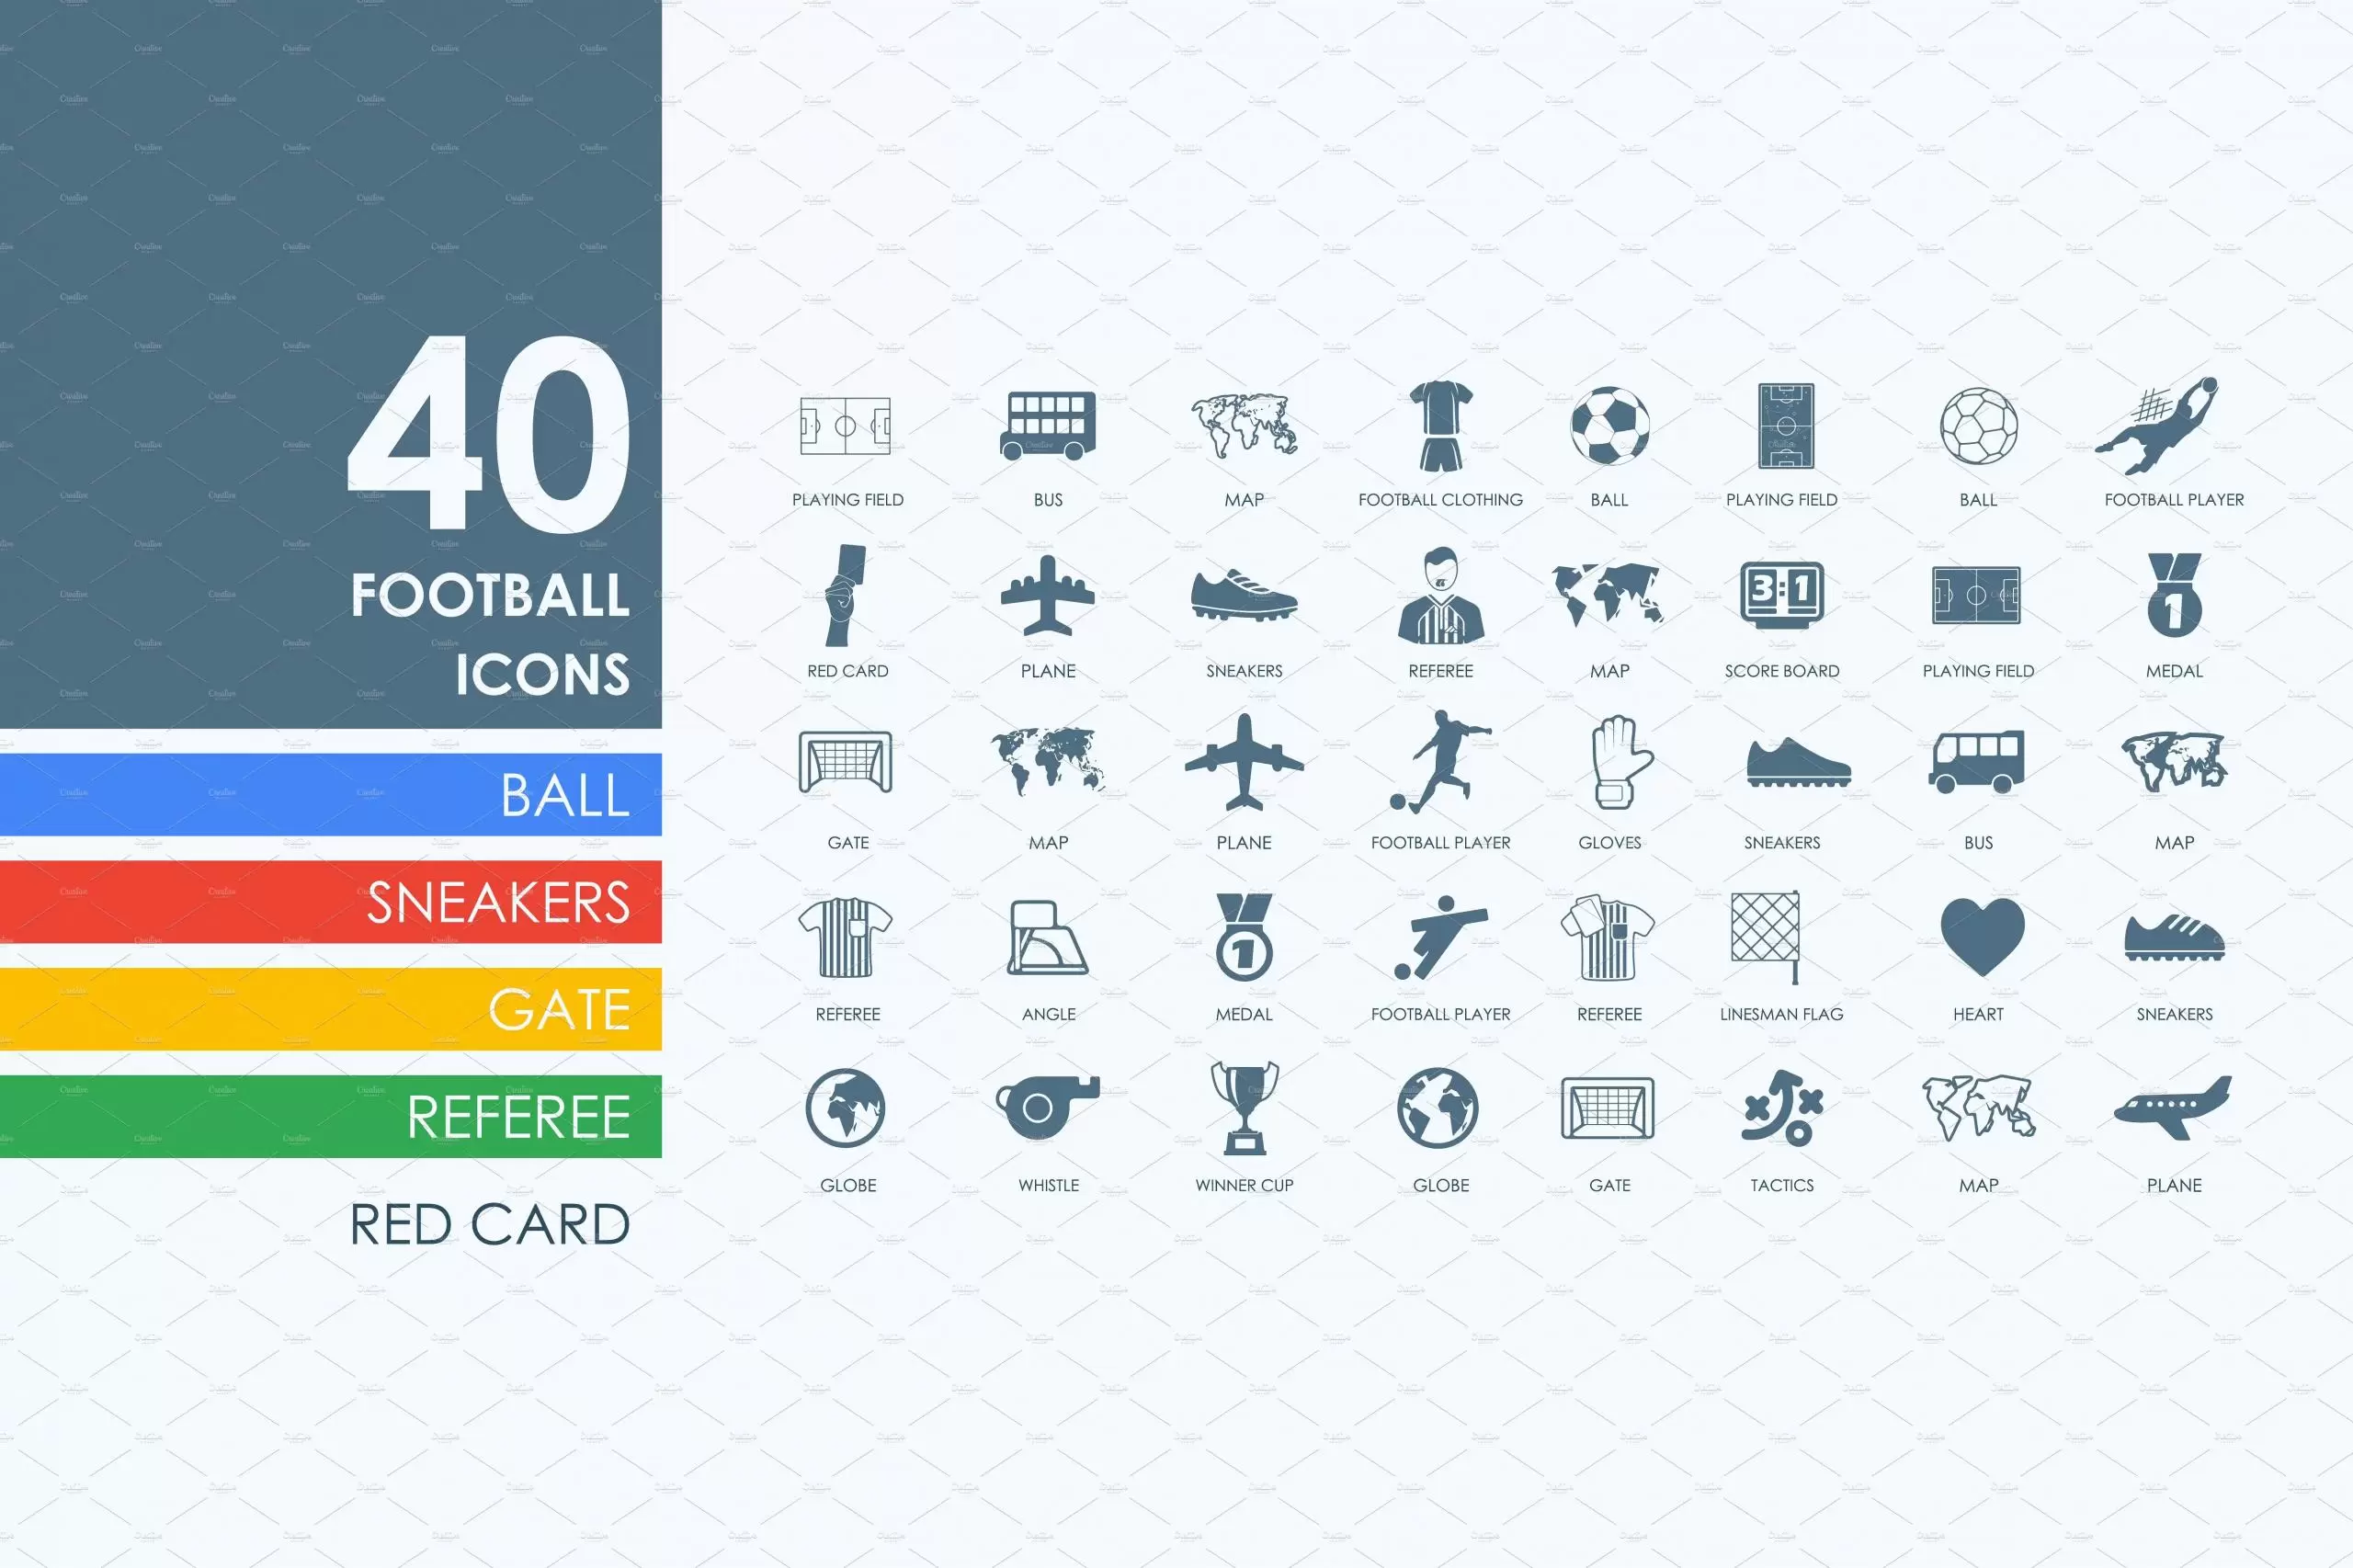 足球图标素材 40 football icons插图